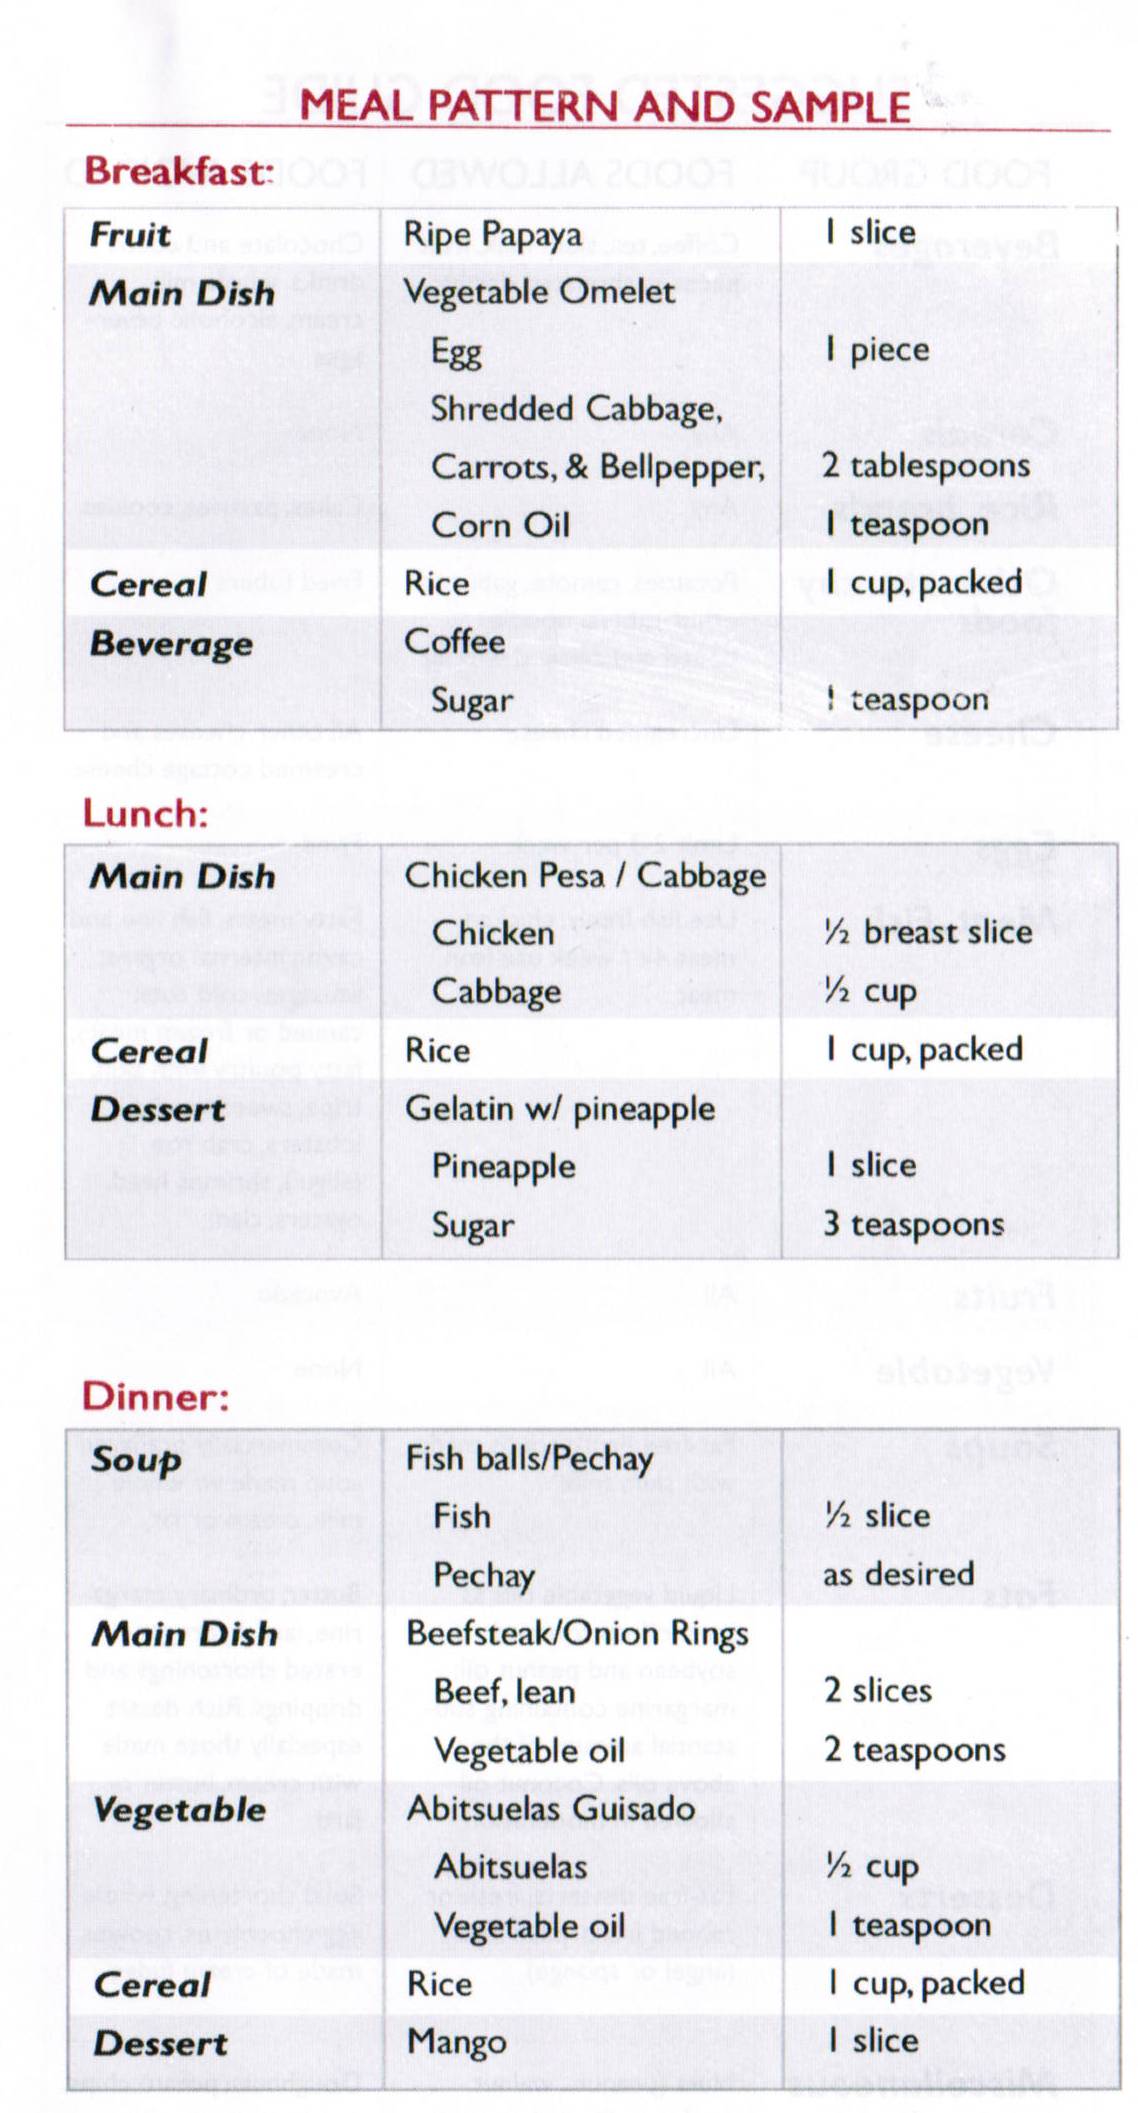 Low Cholesterol Diet Chart